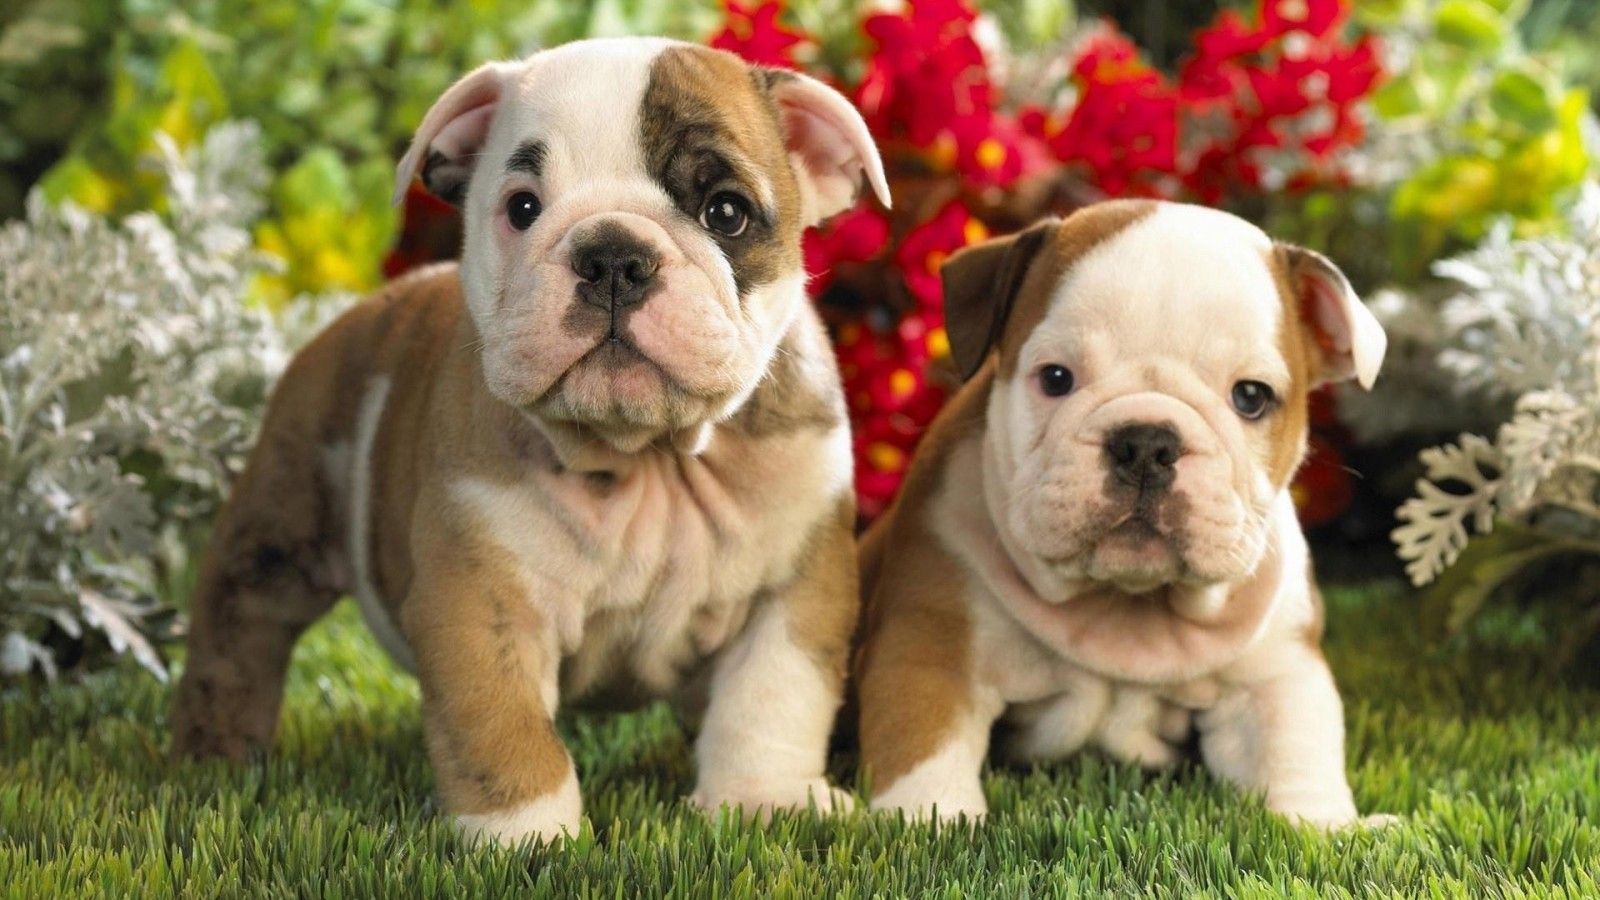 Cute Pitbull Puppies Wallpaper Backgrounds - wallpaper